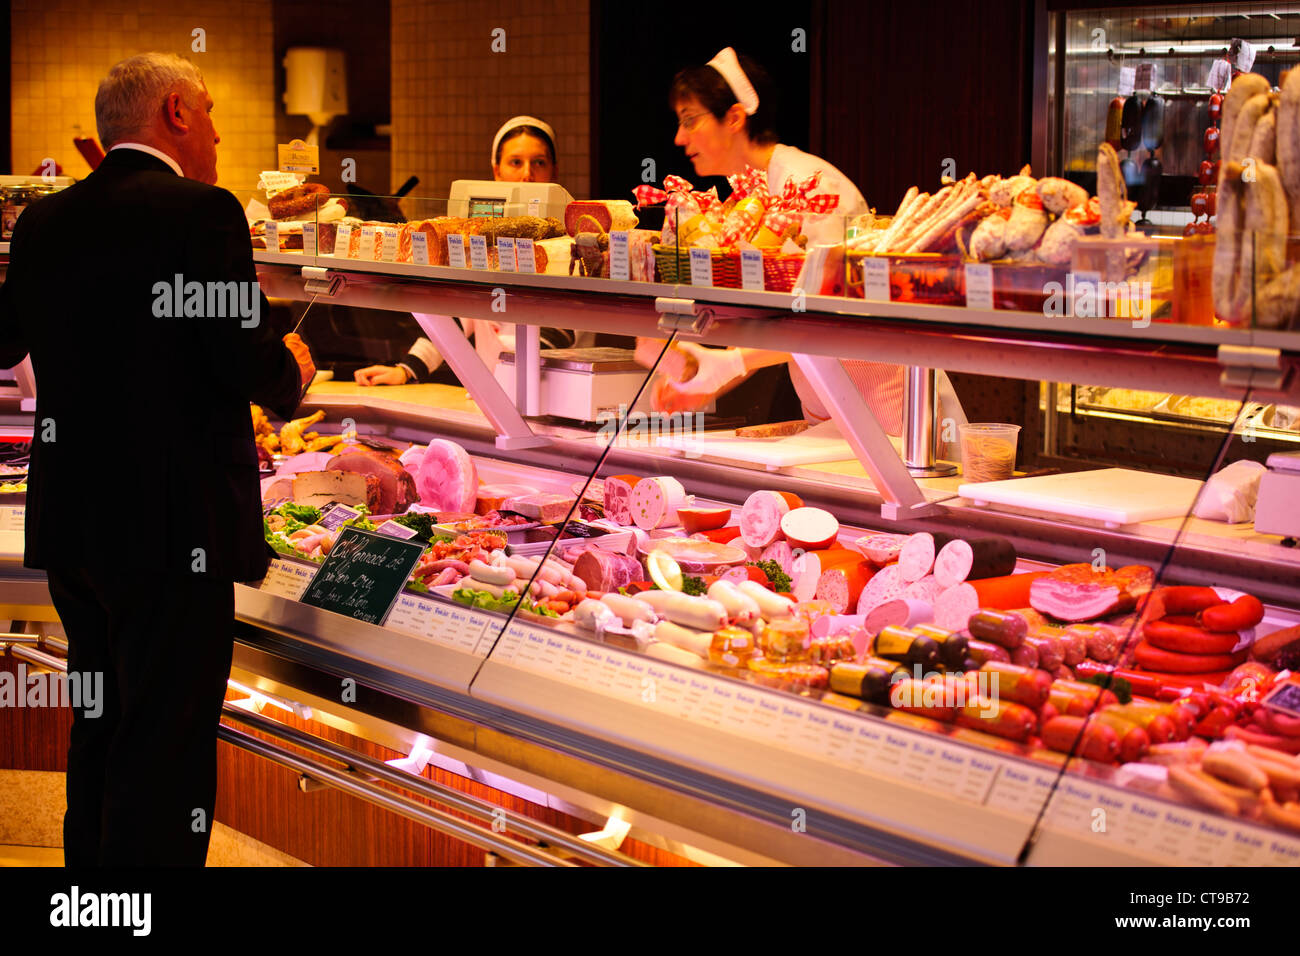 Foie gras,Chacuterie Shops,Cold Meats,Delicatessens,Prepared Foods, Cheeses, Rue Des Ecrivains,Strasbourg,France Stock Photo